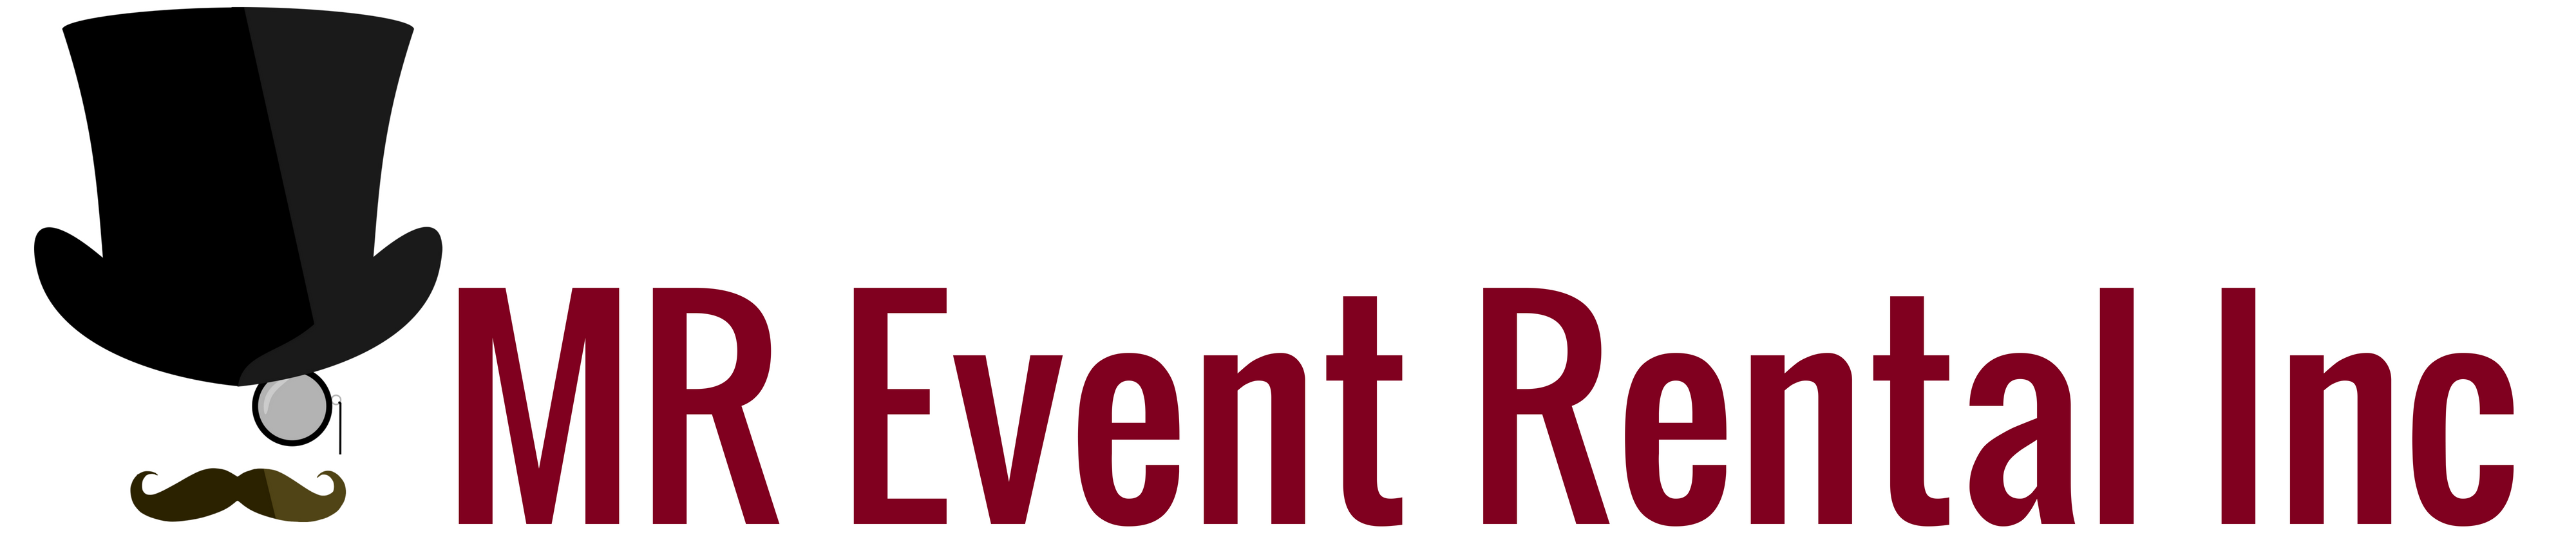 MR Event Rental Inc